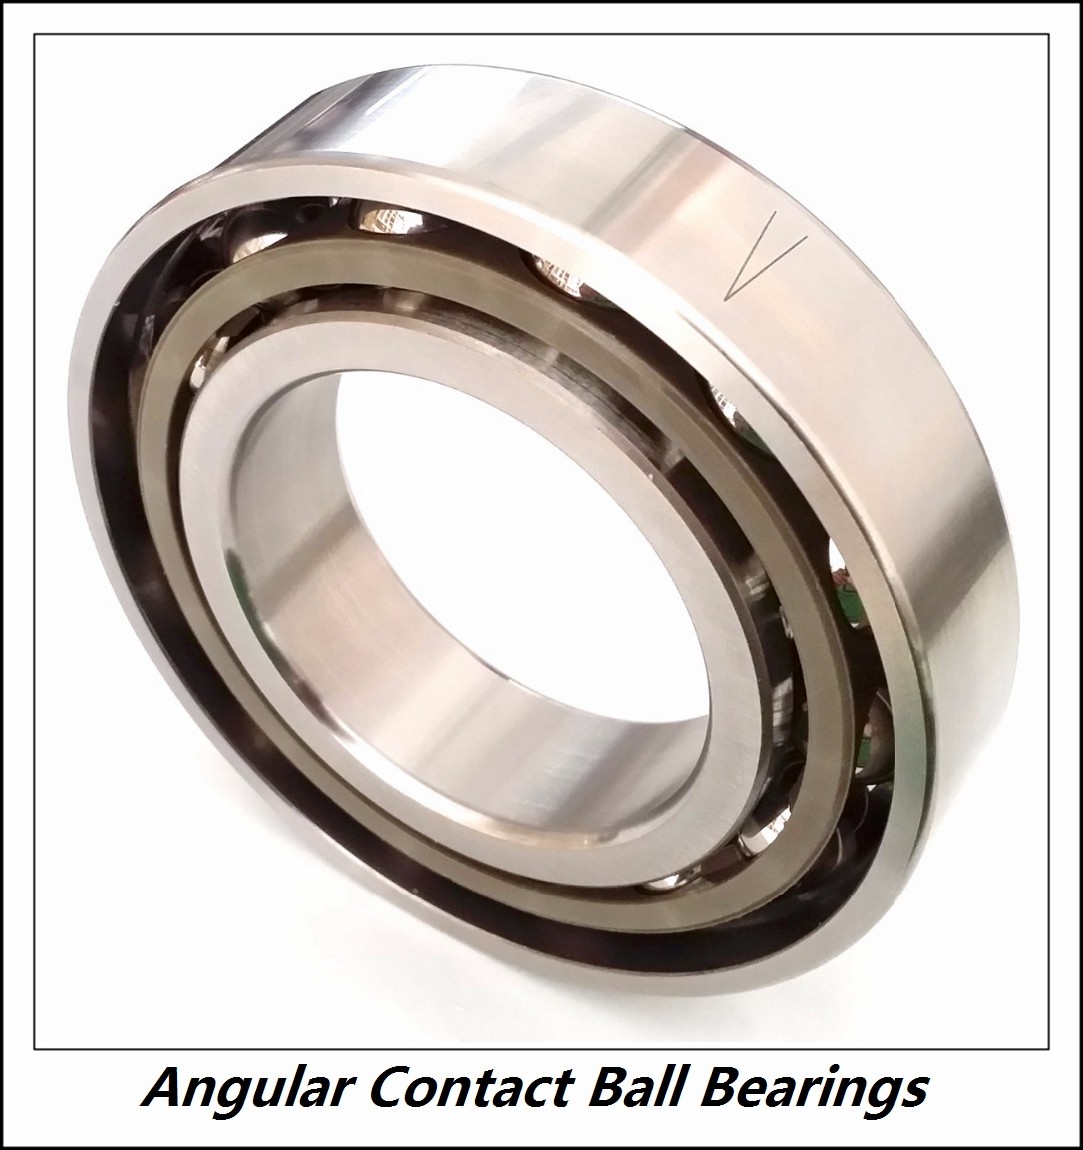 1.575 Inch | 40 Millimeter x 3.15 Inch | 80 Millimeter x 1.189 Inch | 30.2 Millimeter  NSK 3208BZTNG  Angular Contact Ball Bearings